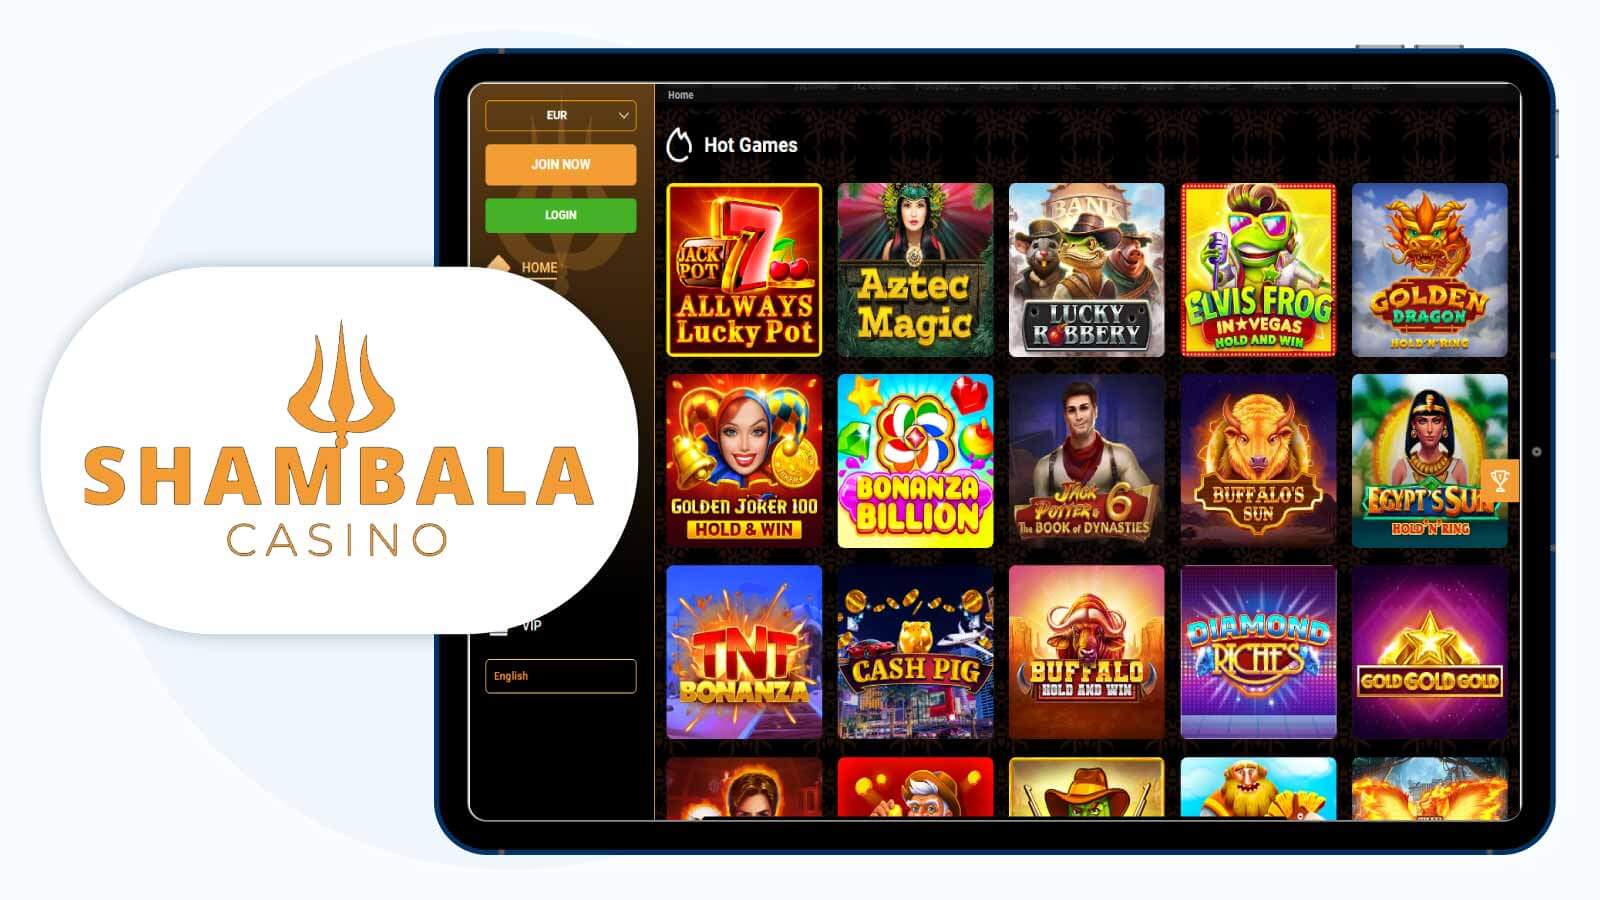 Shambala-Casino-Explore-the-Aztec-Magic-Slot-(96.69%-RTP)-with-50-Free-Spins